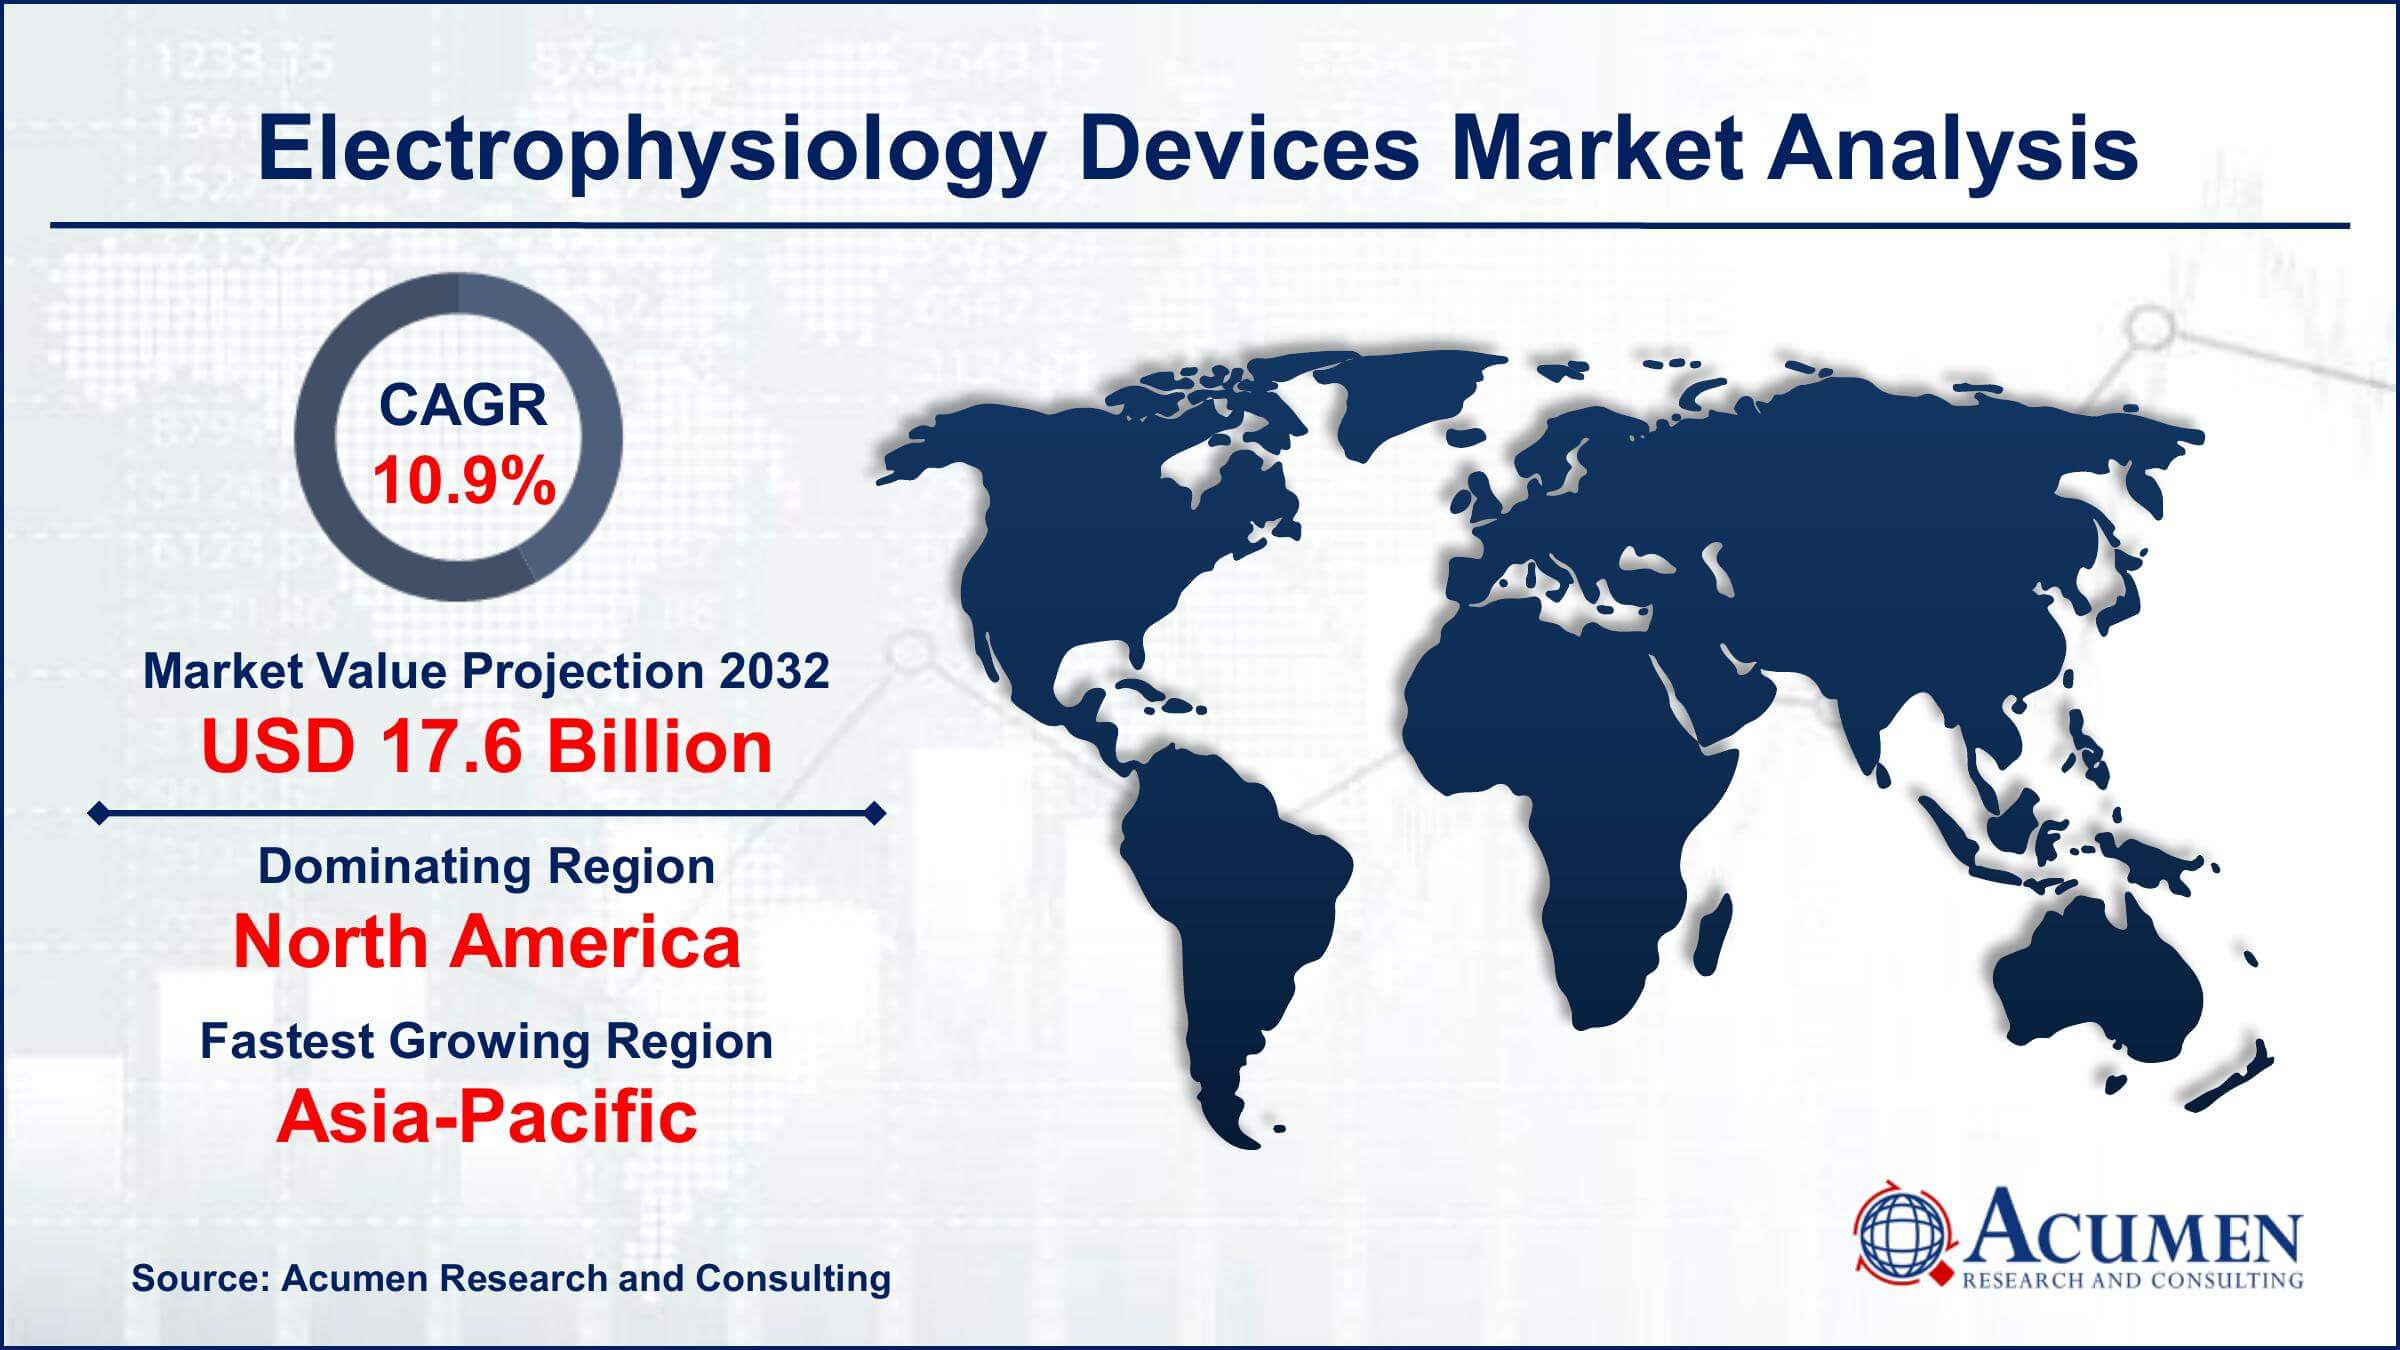 Global Electrophysiology Devices Market Trends